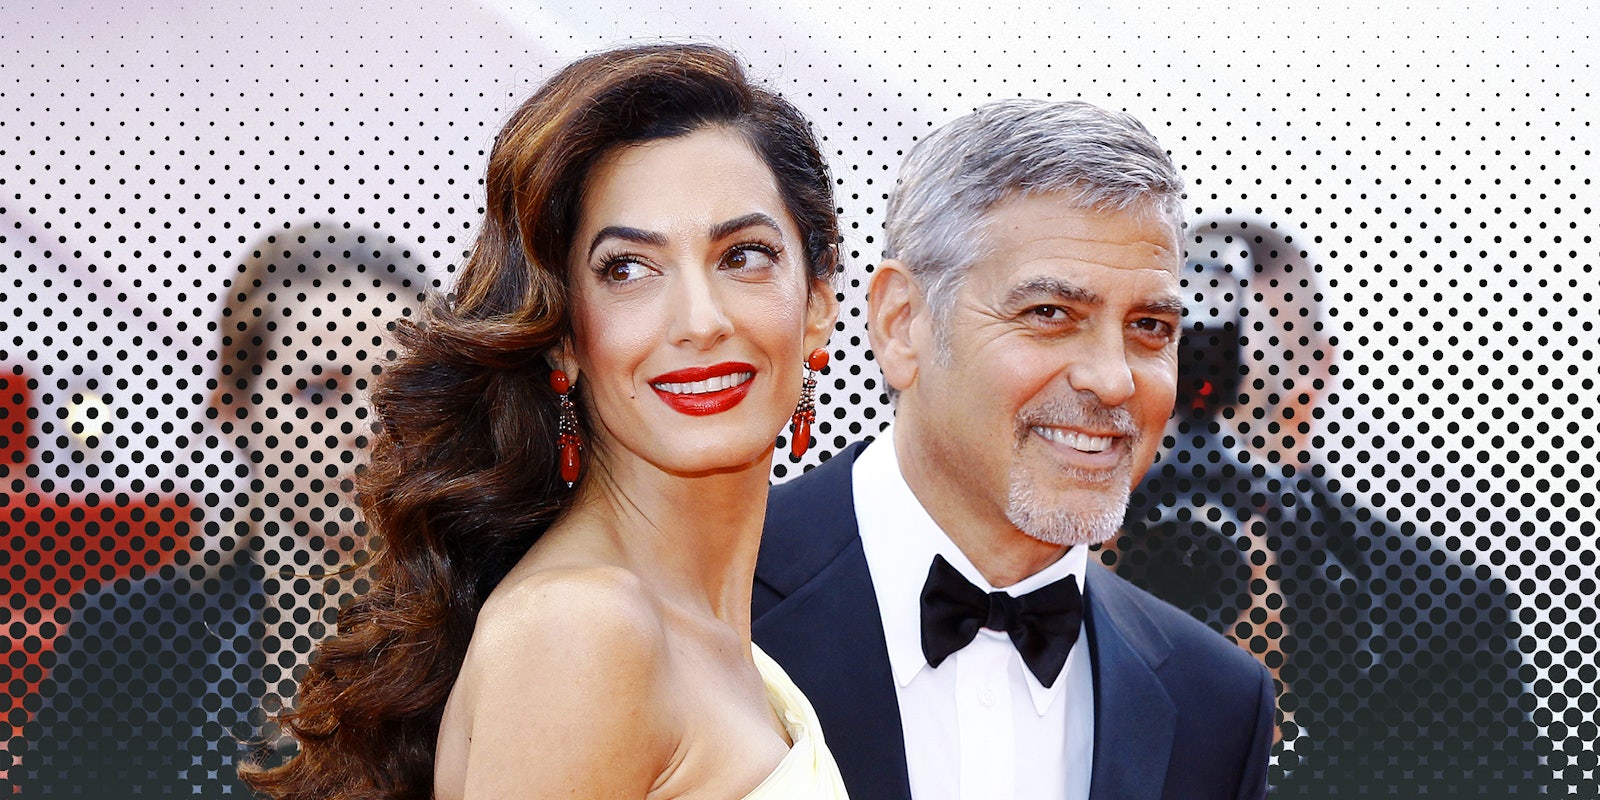 George and Amal Alamuddin Clooney smiling.